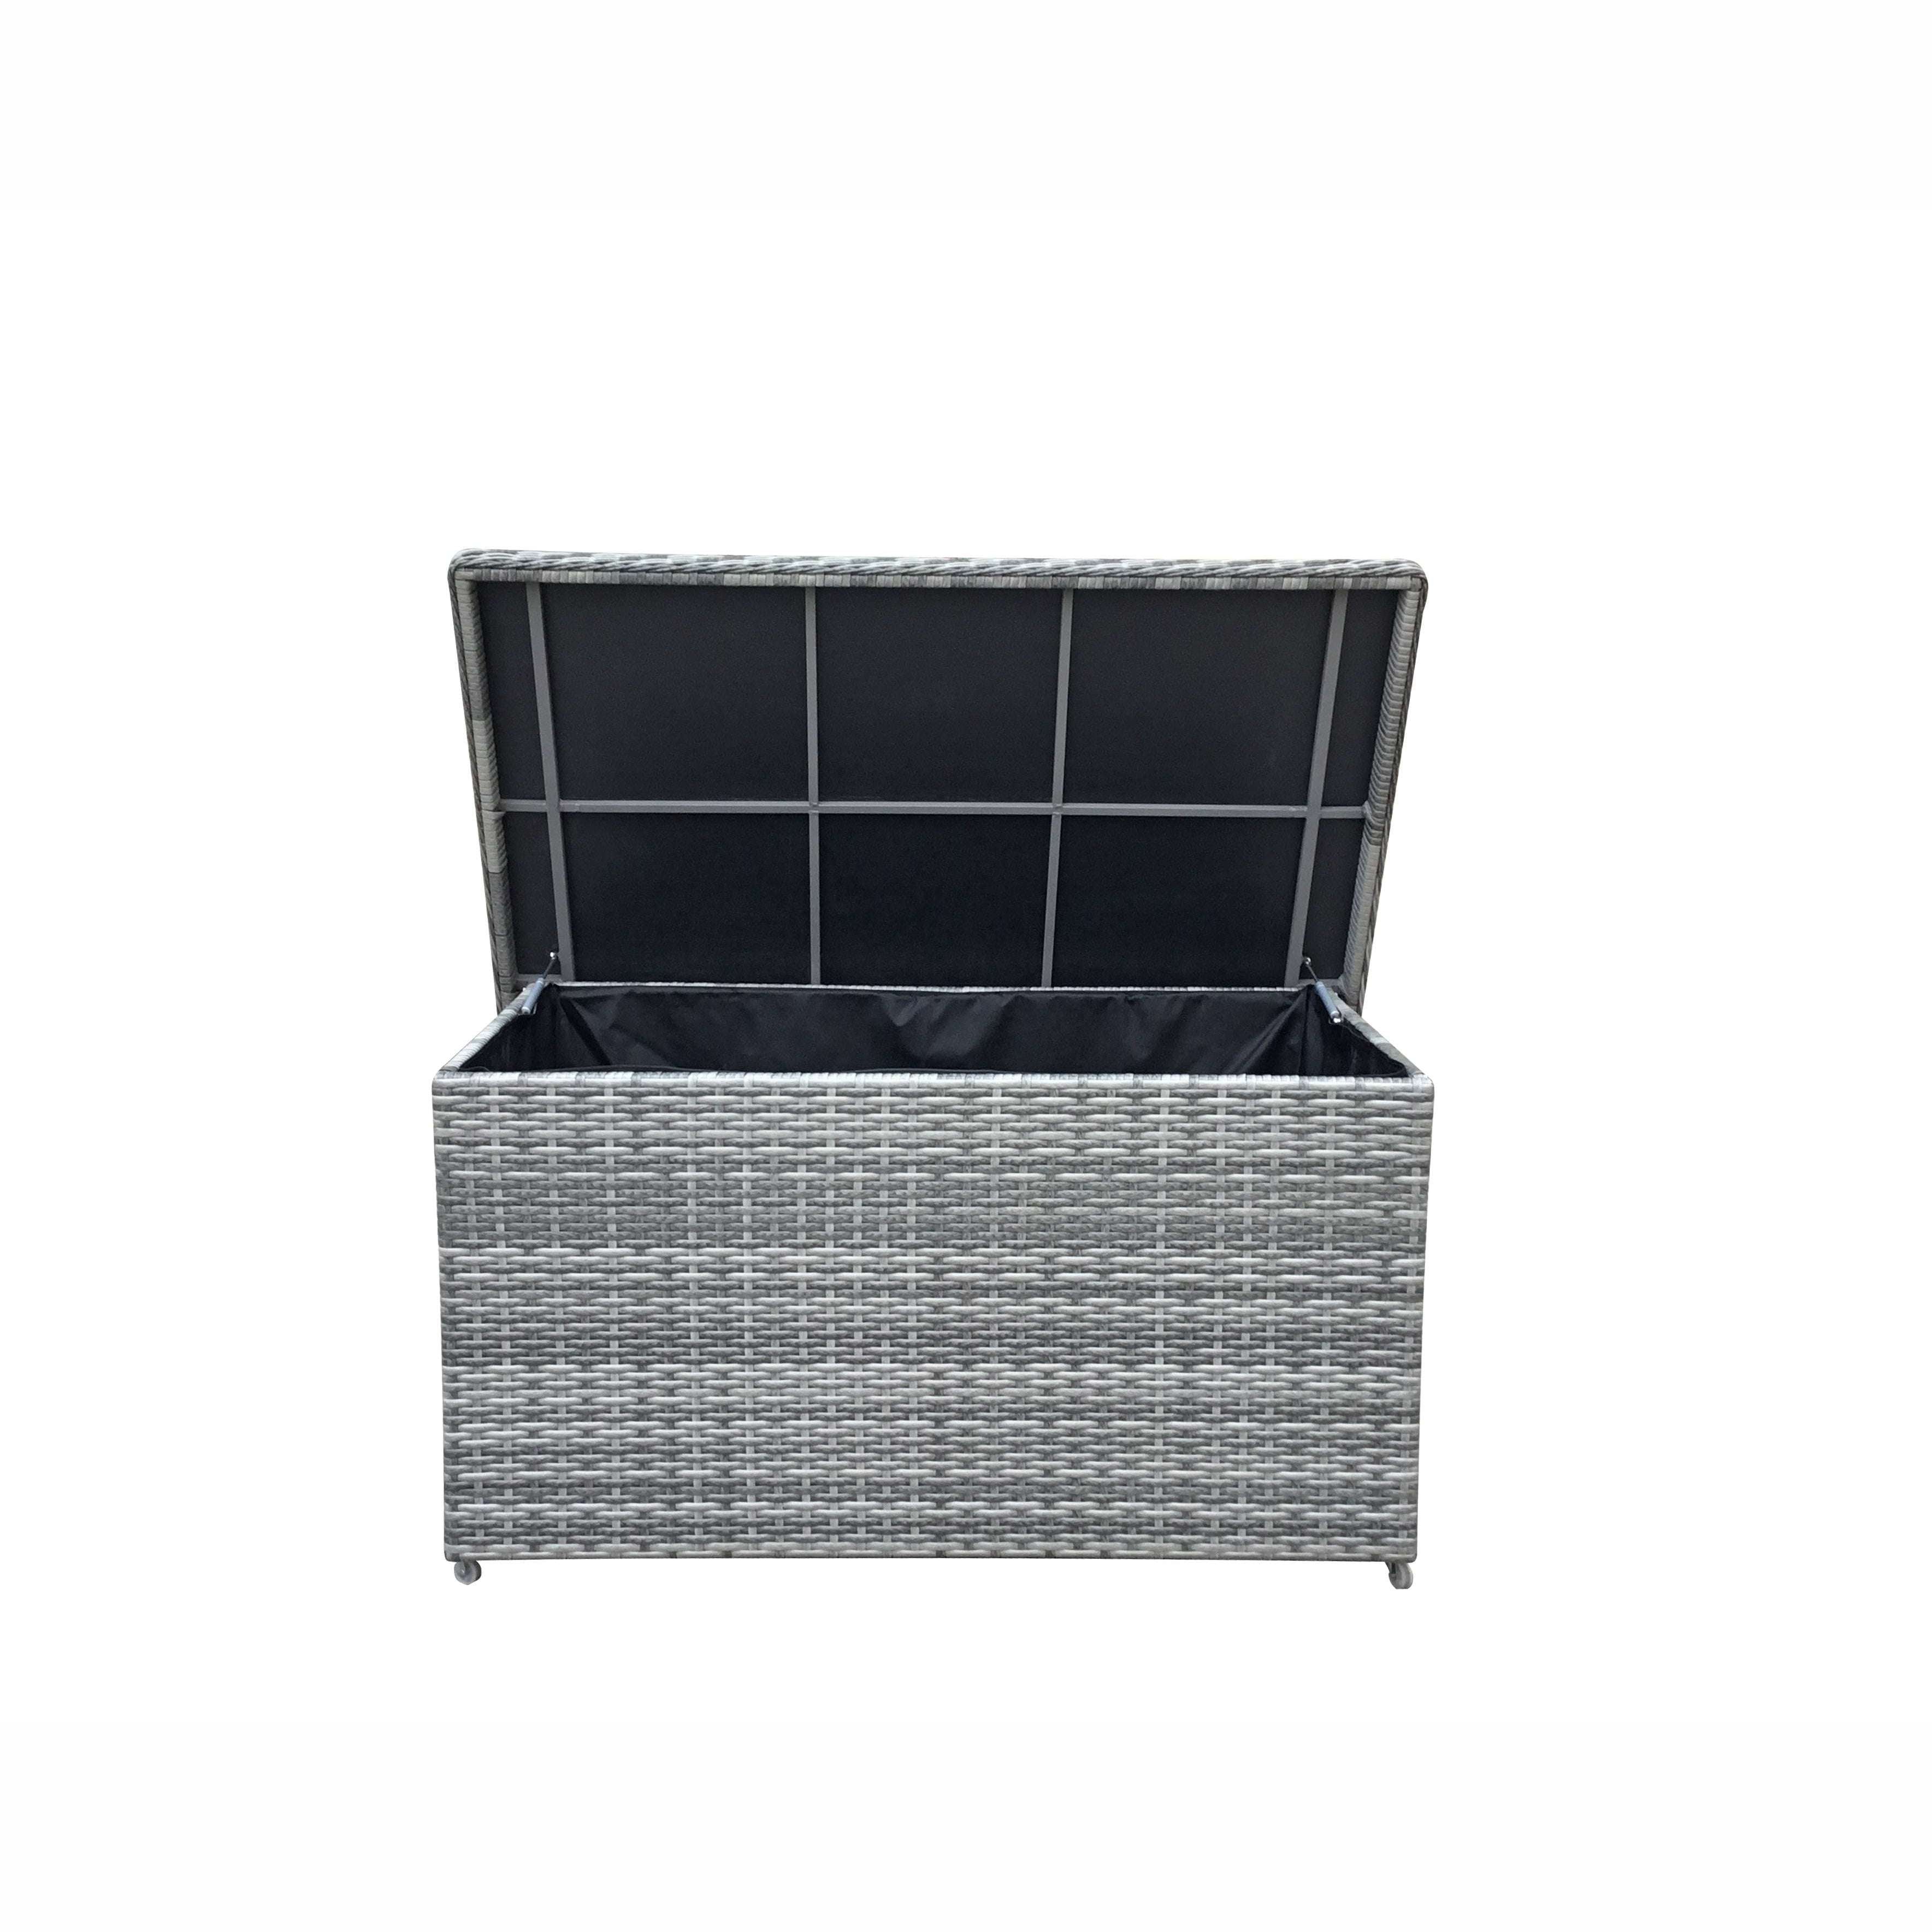 Exceptional Garden:Signature Weave Cushion Box - Large Sarah Grey Weave